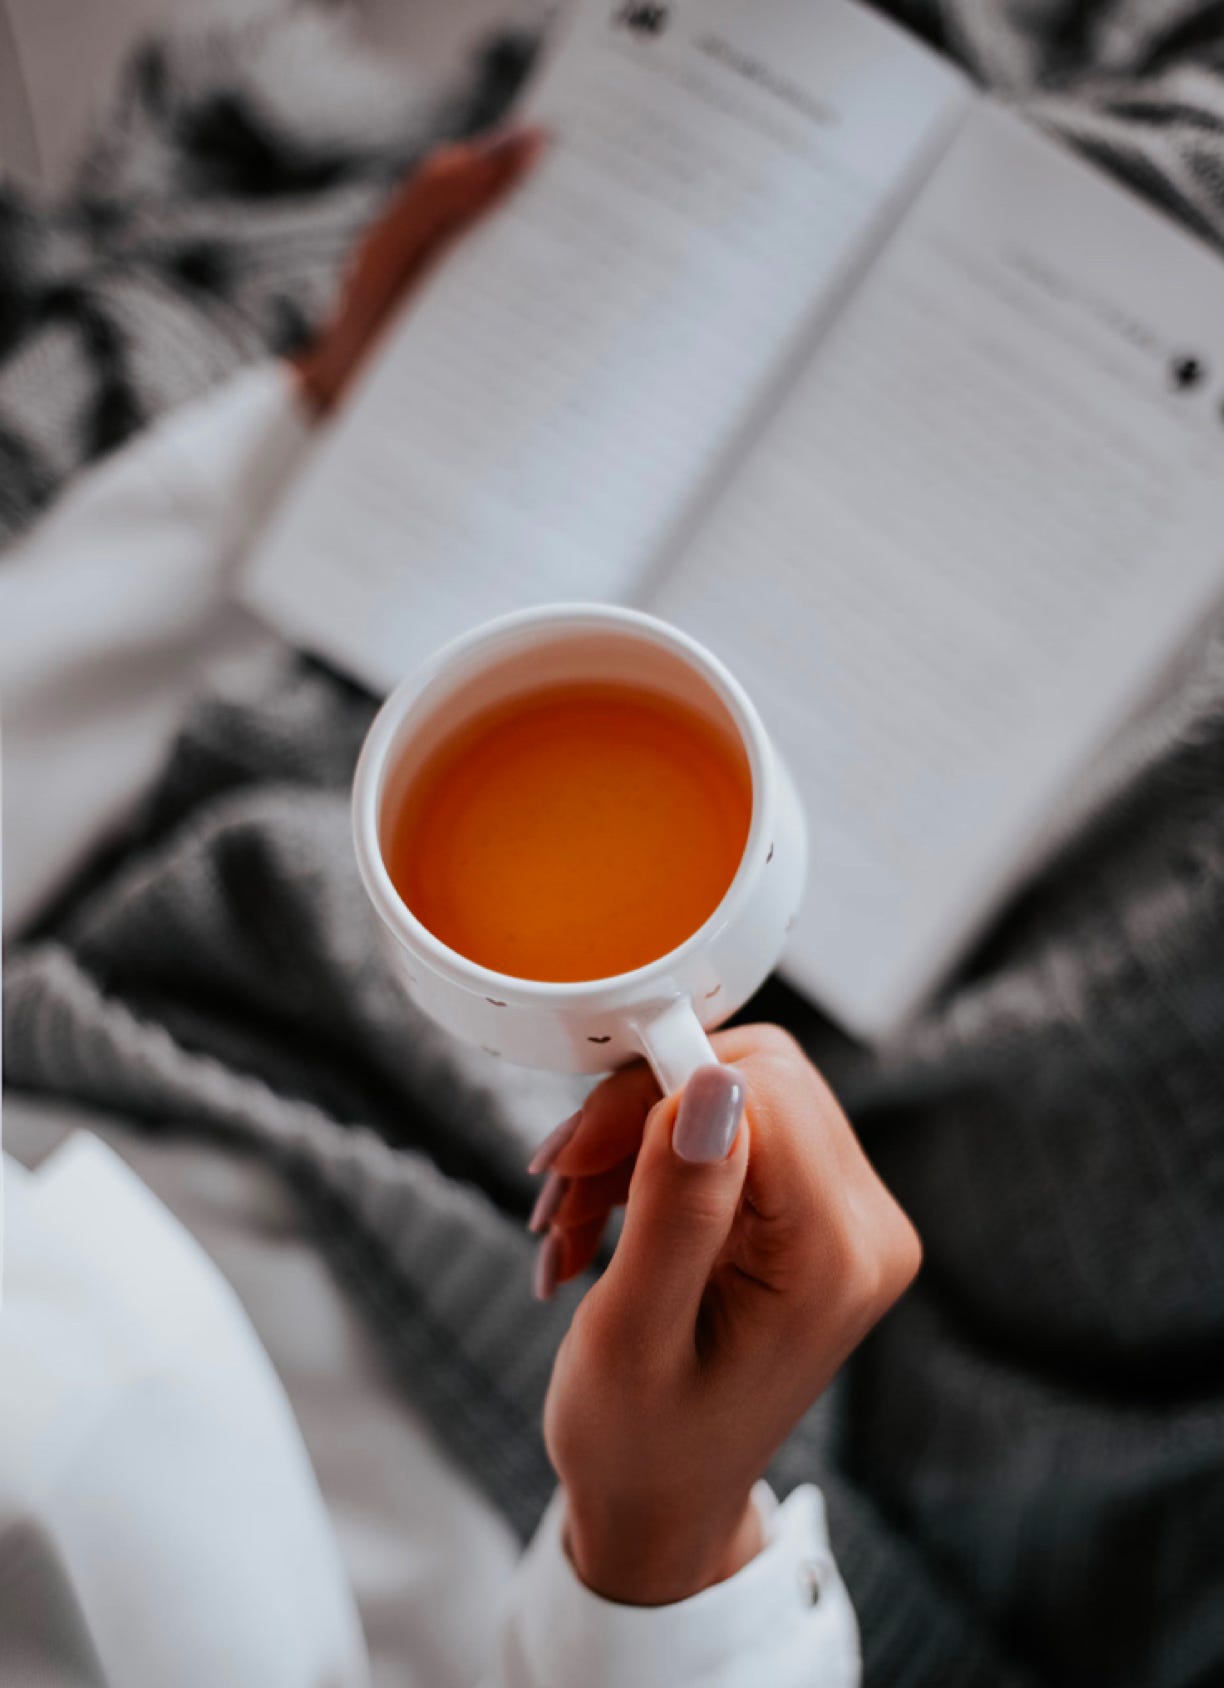 Drinking tea and enjoying a book